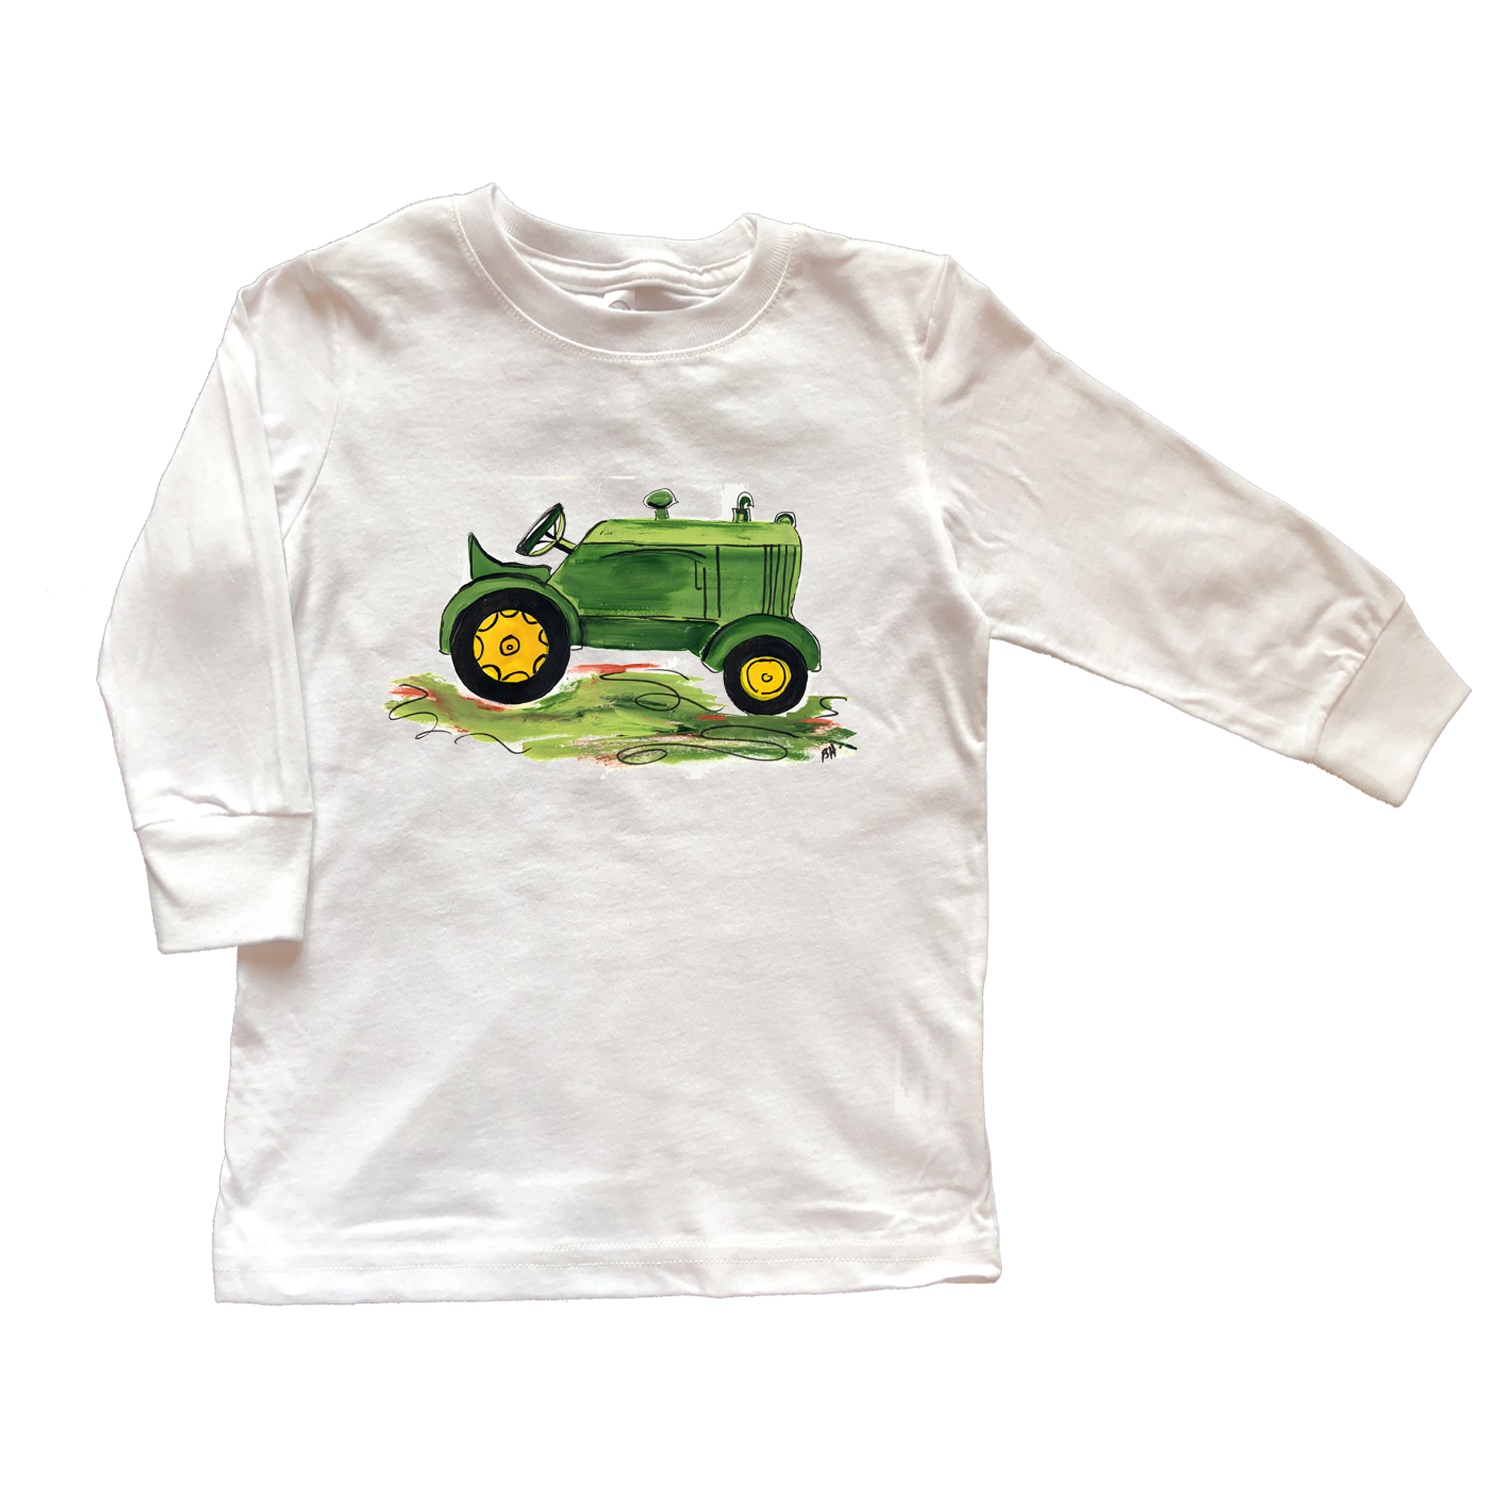 Cotton Tee Shirt Long Sleeve 606 Green Tractor